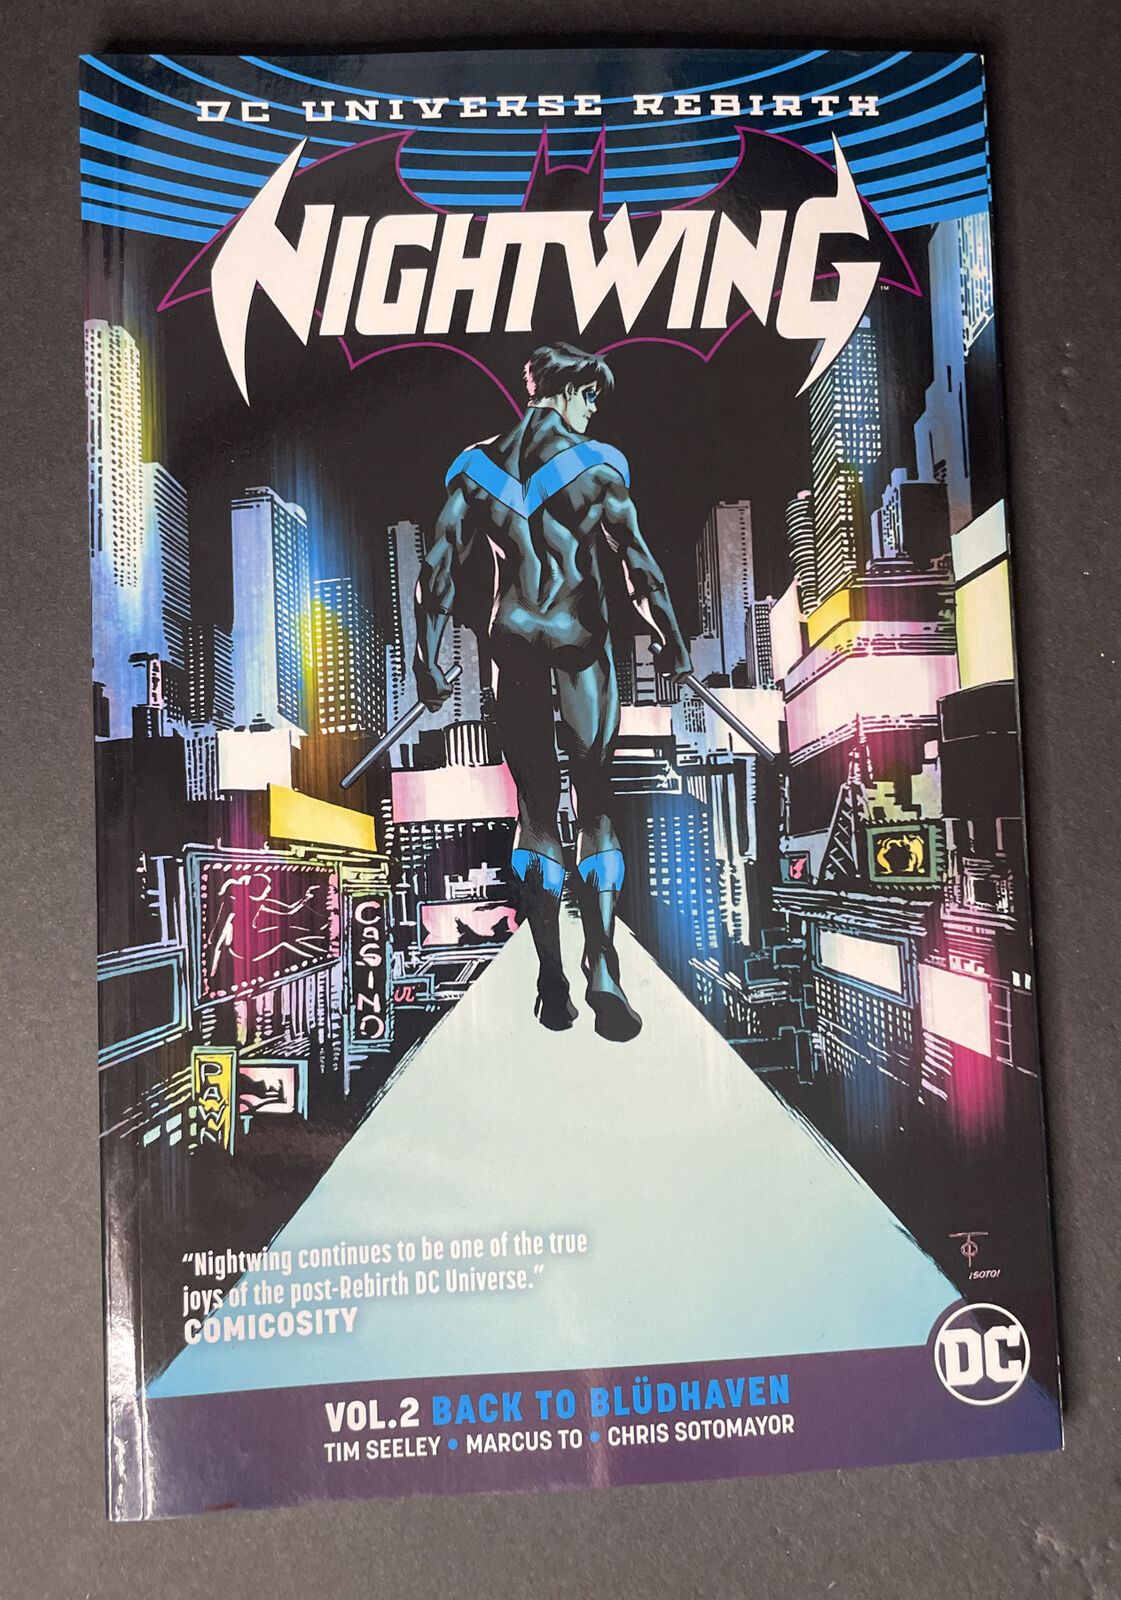 Nightwing #2 (DC Comics, August 2017)